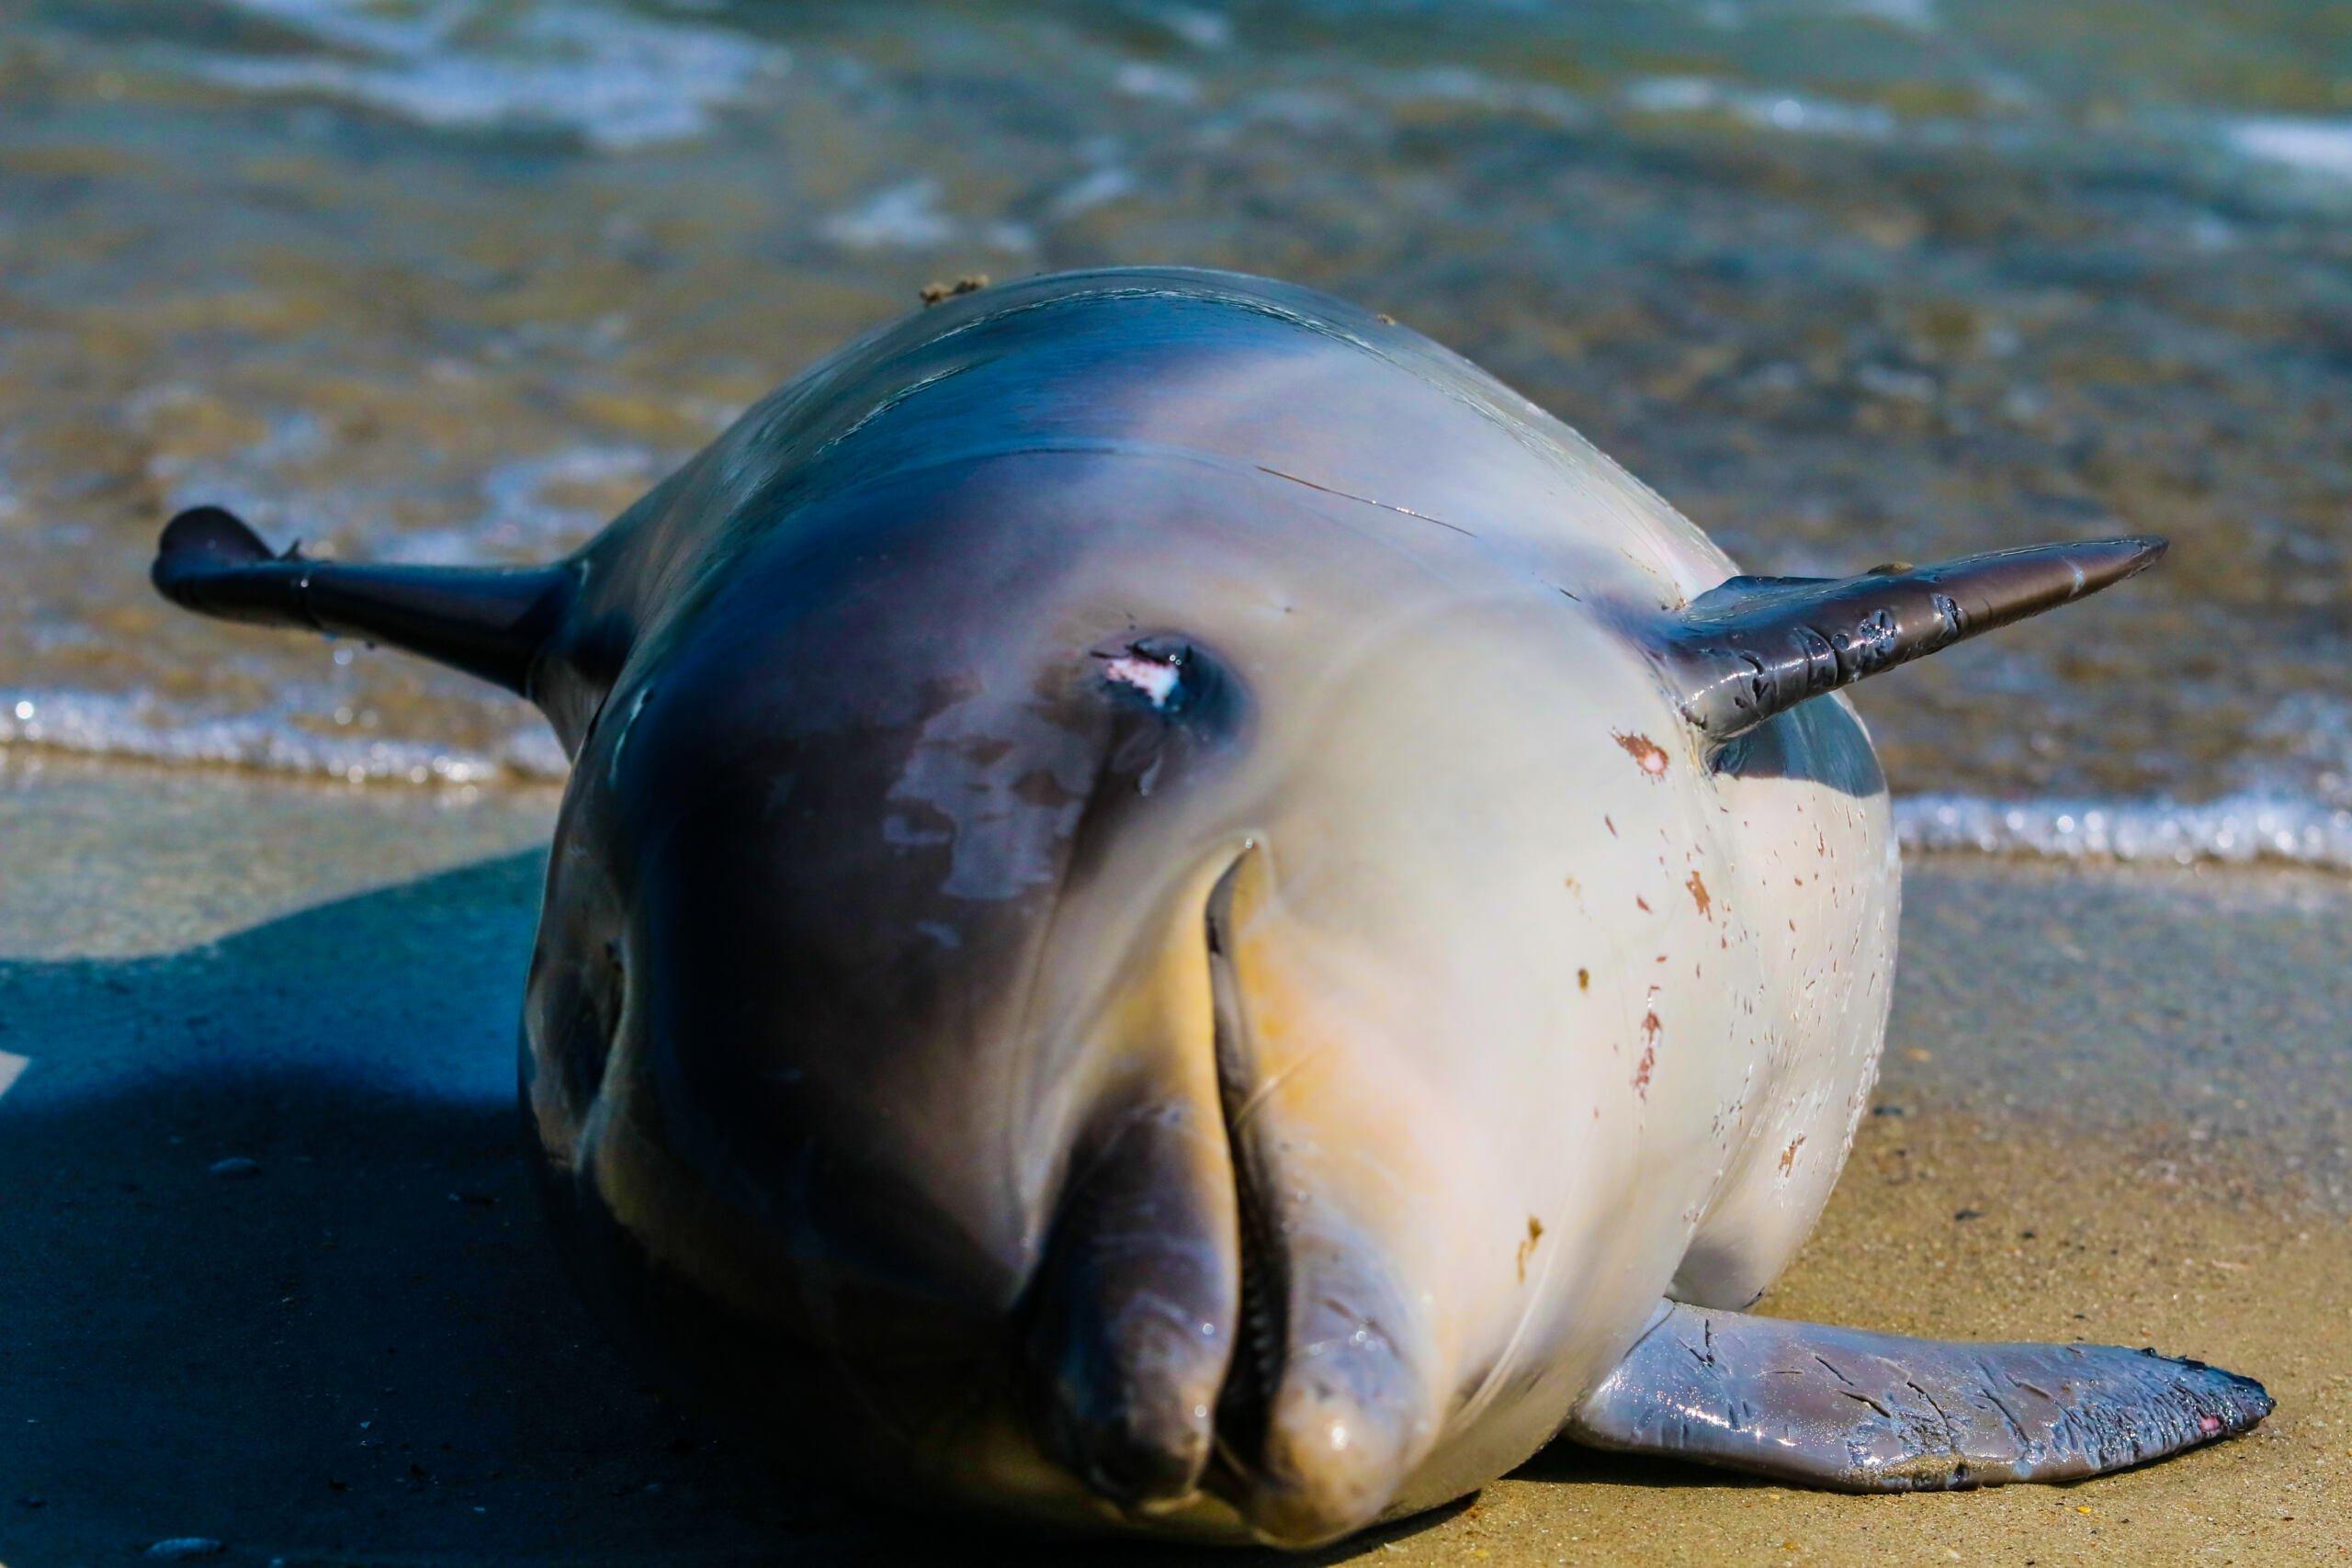 martwy delfin na brzegu